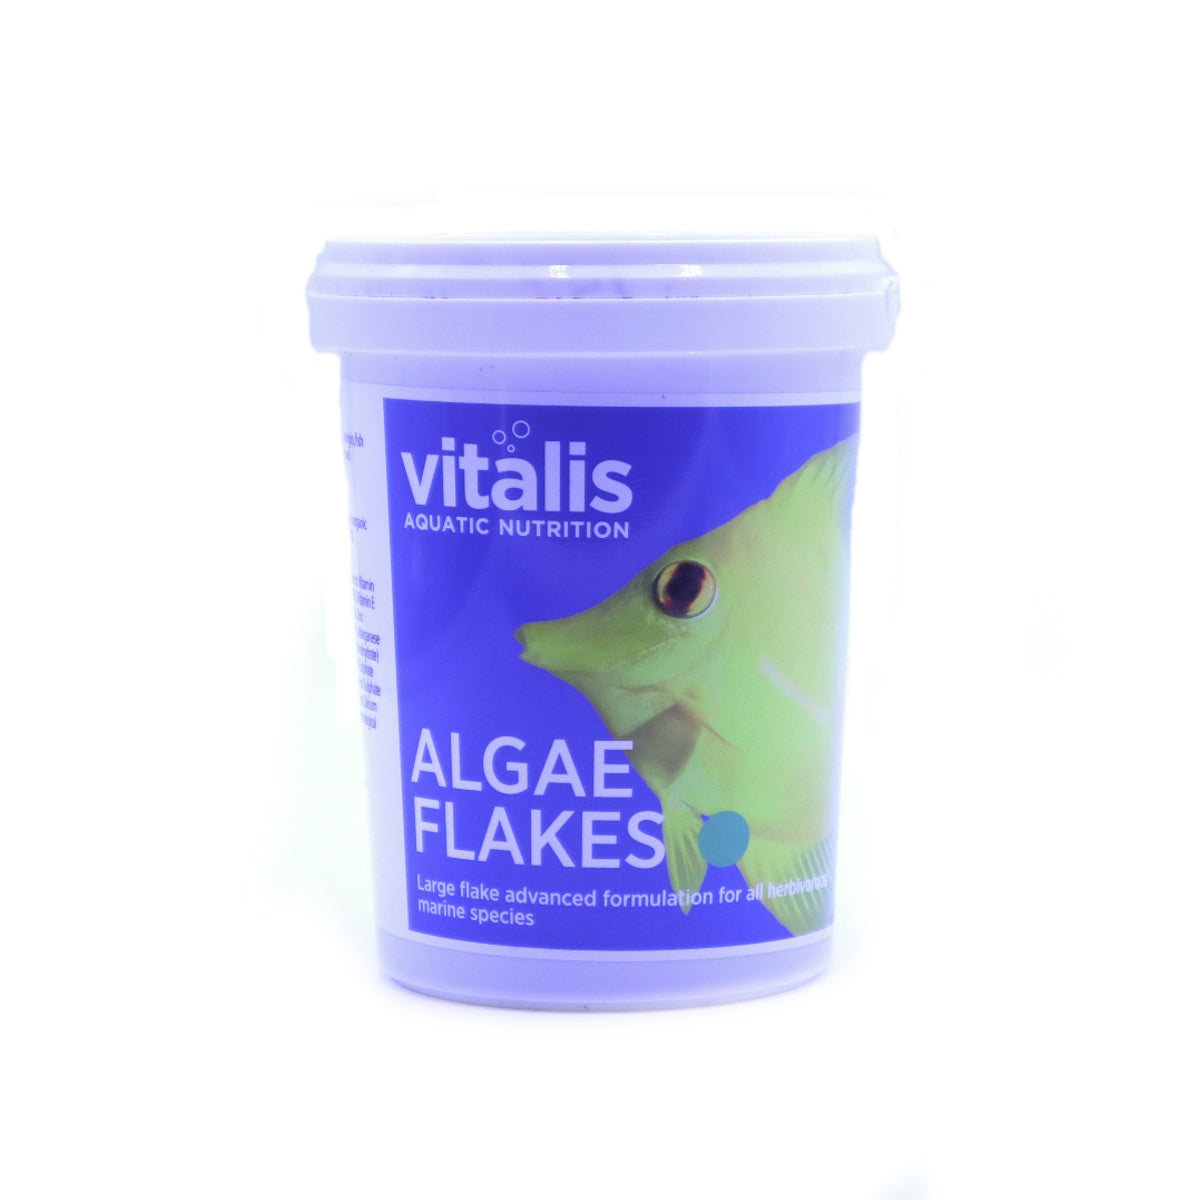 Algae Flakes